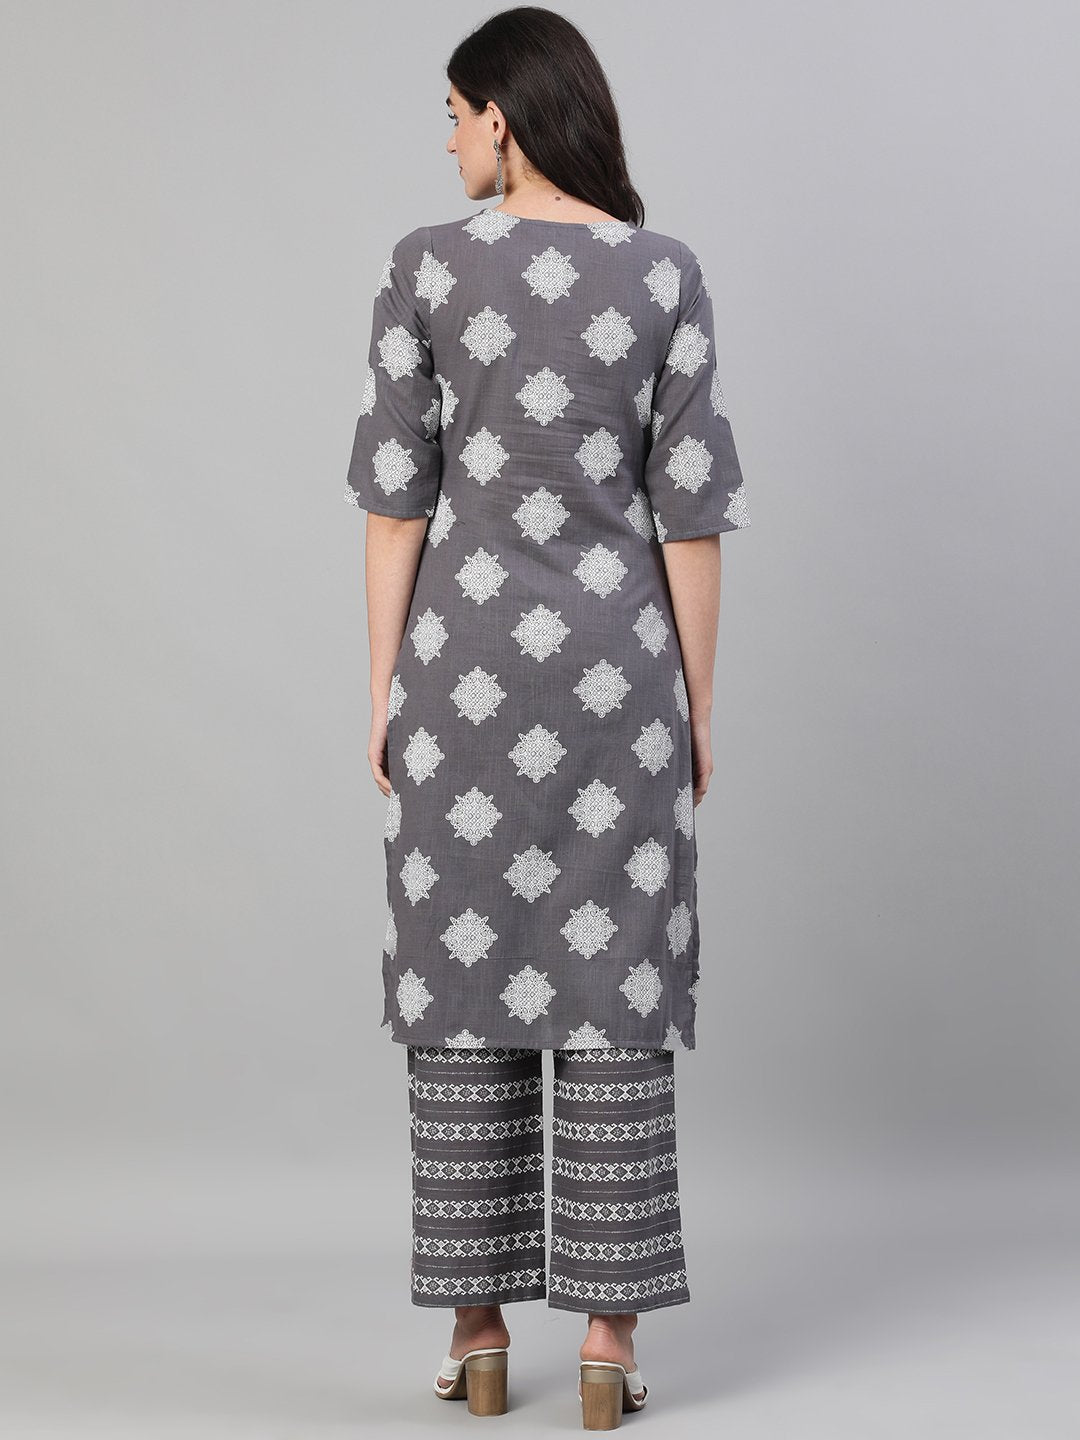 Women's Steel Grey Three-Quarter Sleeves Printed Kurta-Palazzo With Pockets And Face Mask - Nayo Clothing